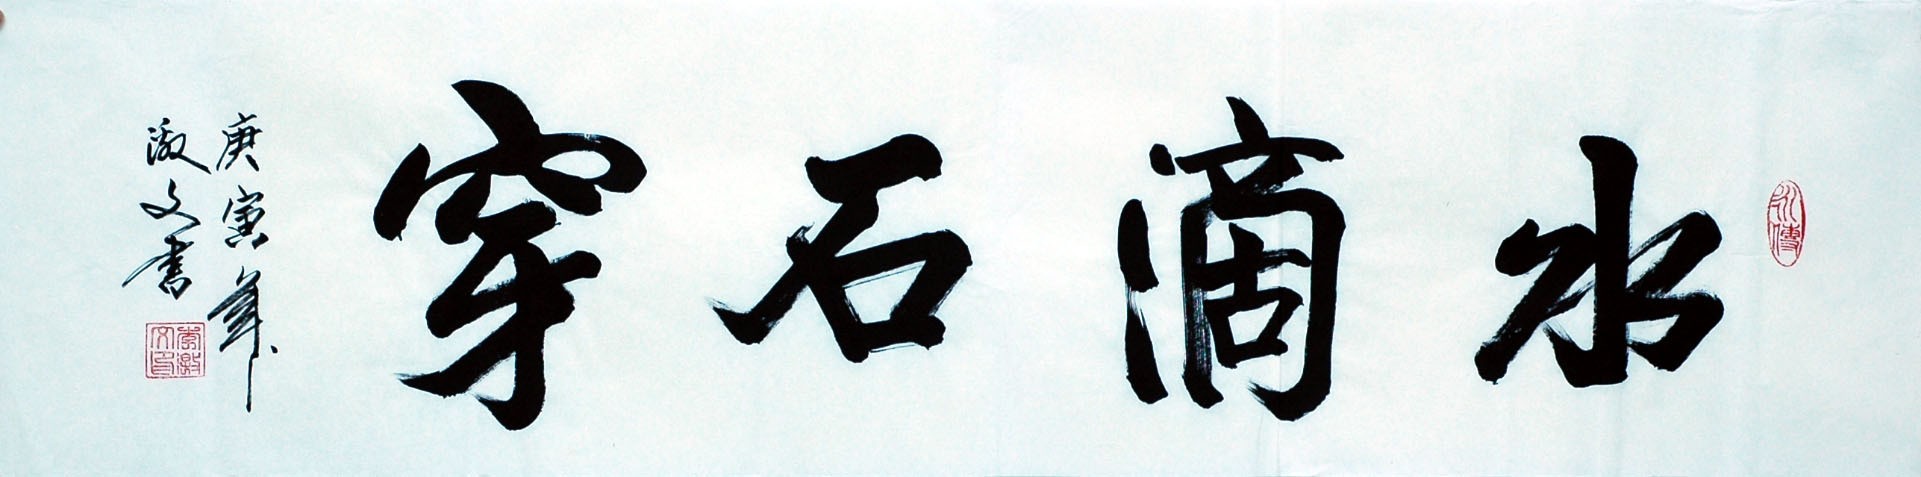 Chinese Regular Script Painting - CNAG007217